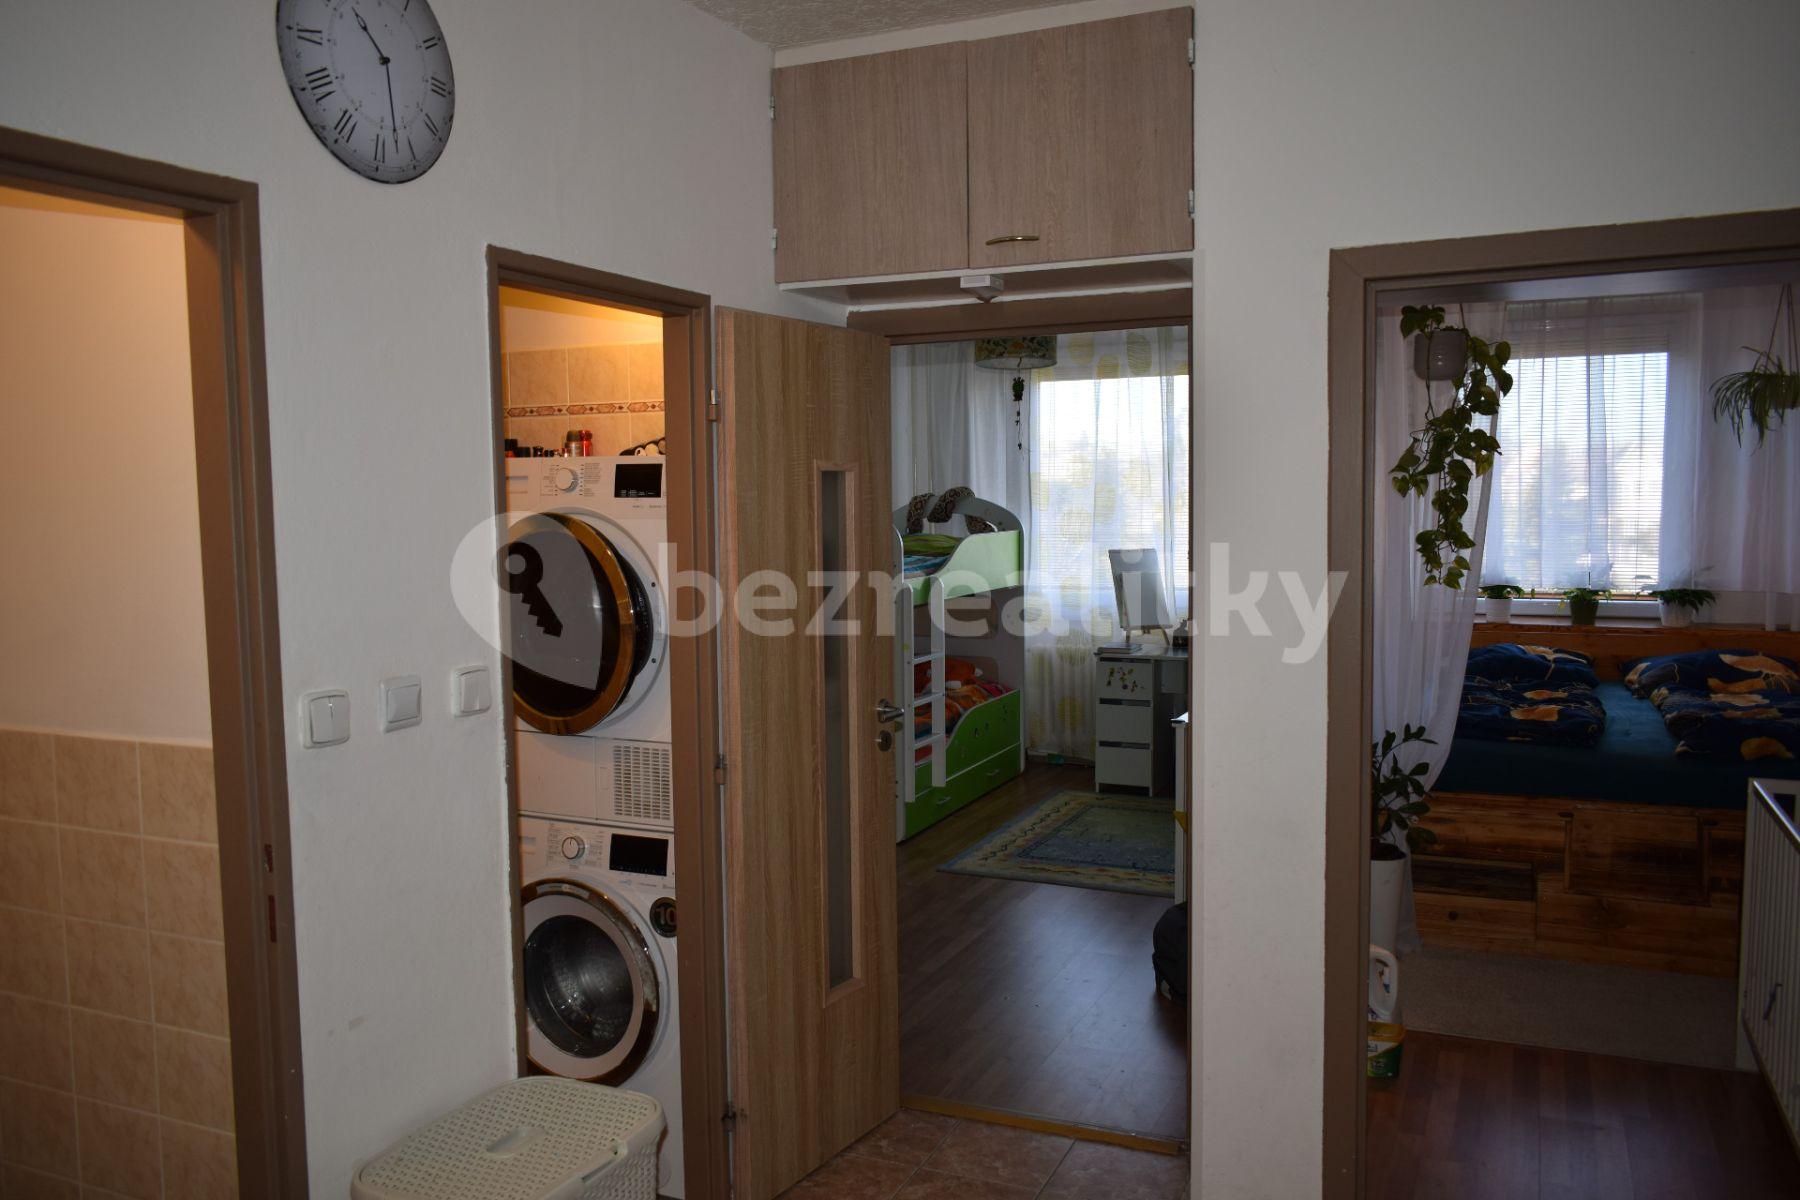 Predaj bytu 3-izbový 64 m², Brechtova, Praha, Praha